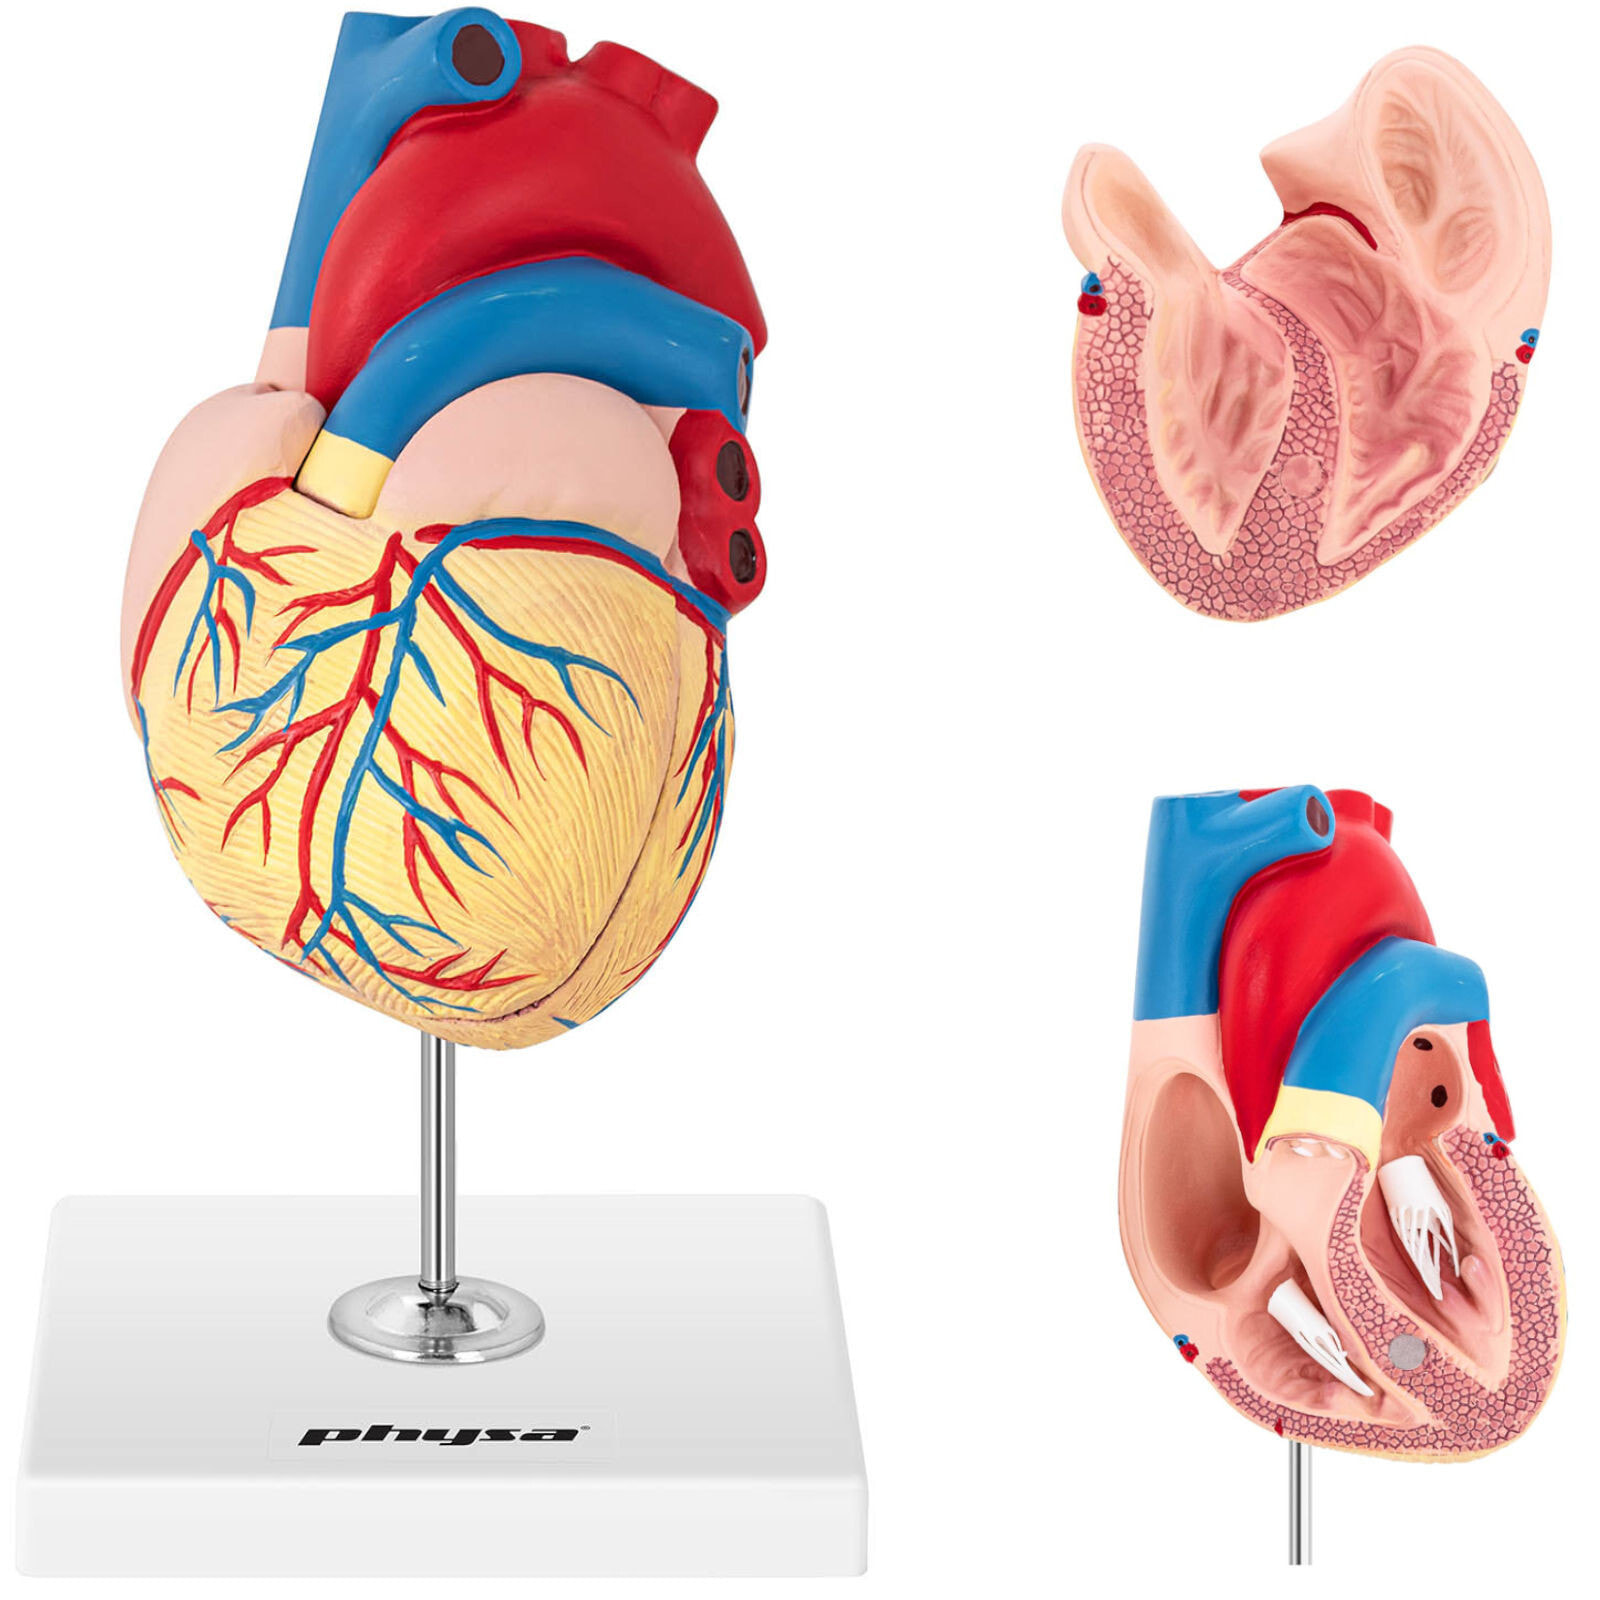 3D human heart anatomy model